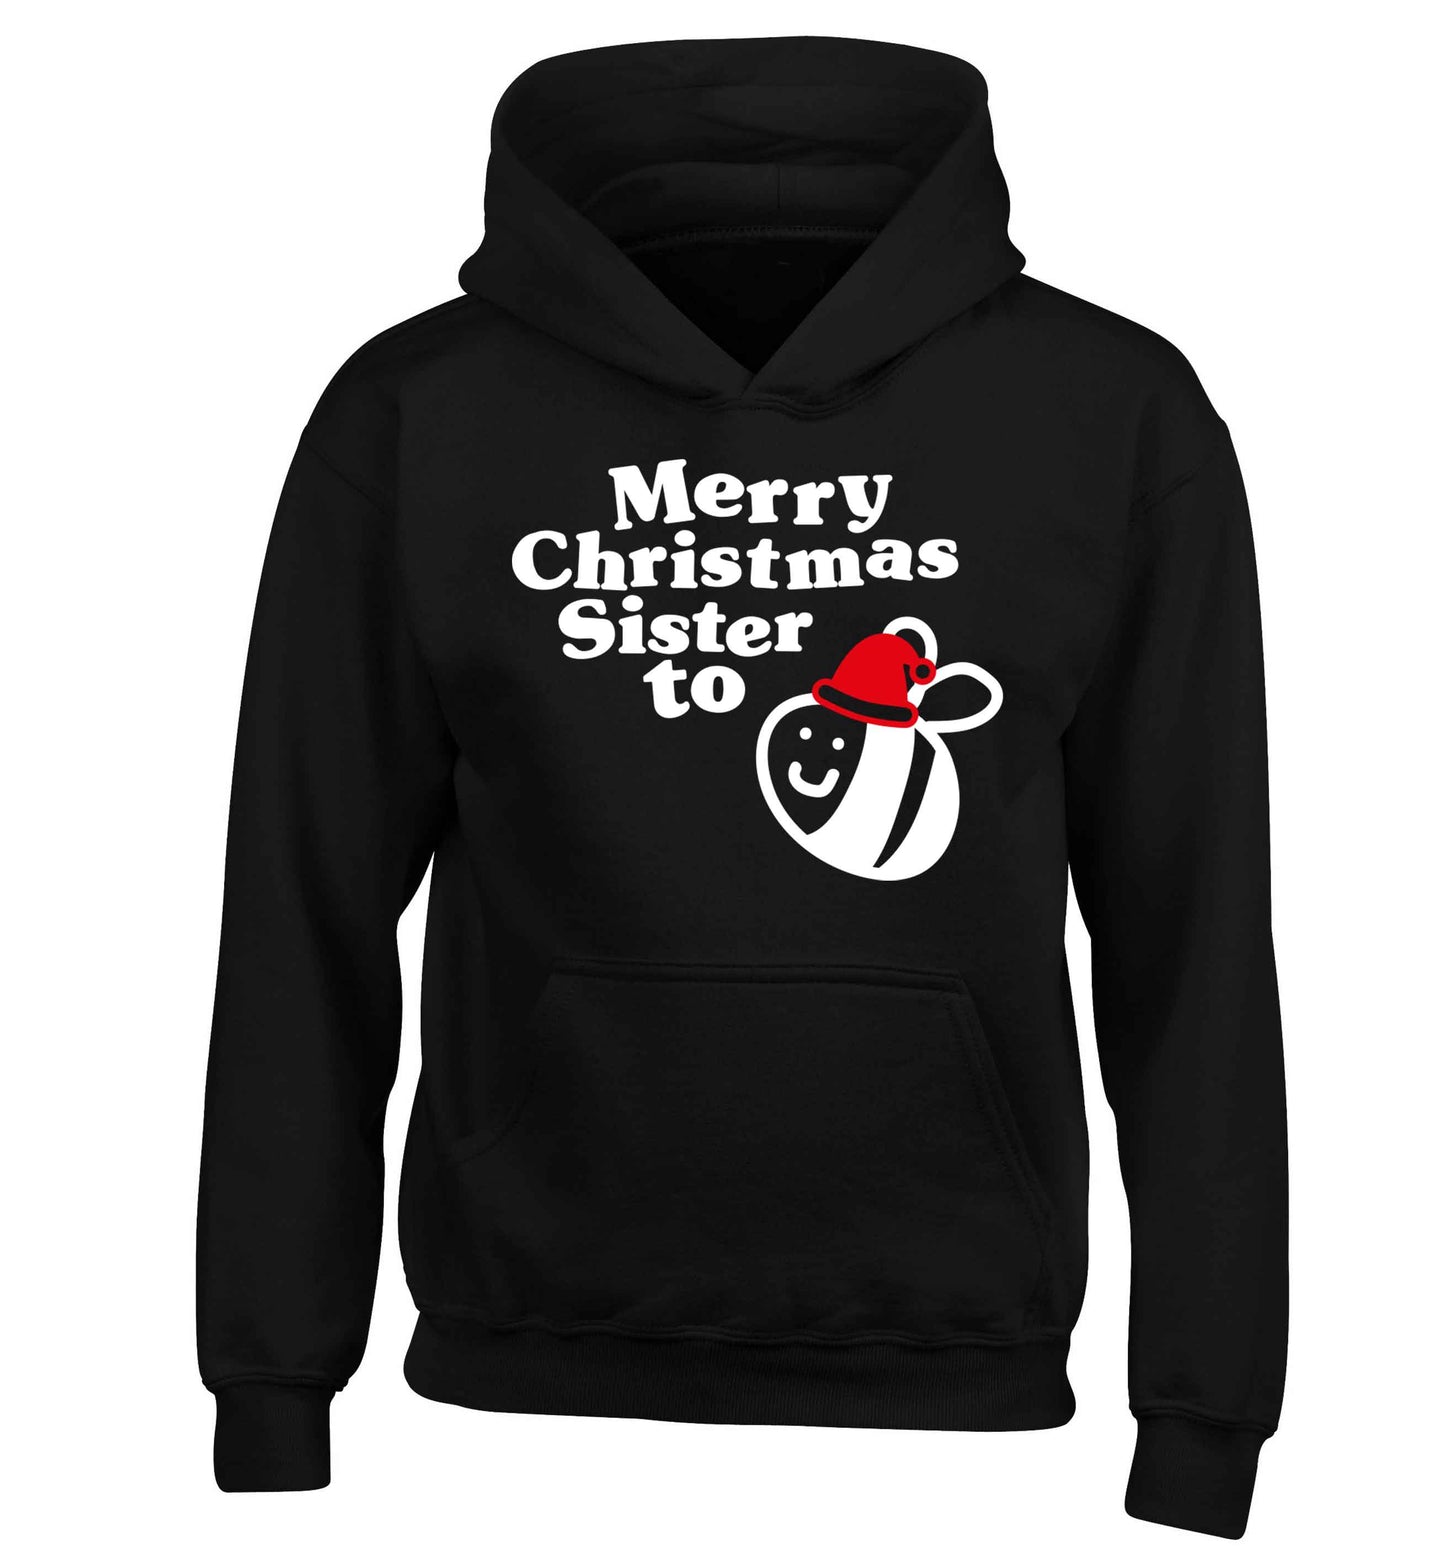 Merry Christmas sister to be children's black hoodie 12-13 Years